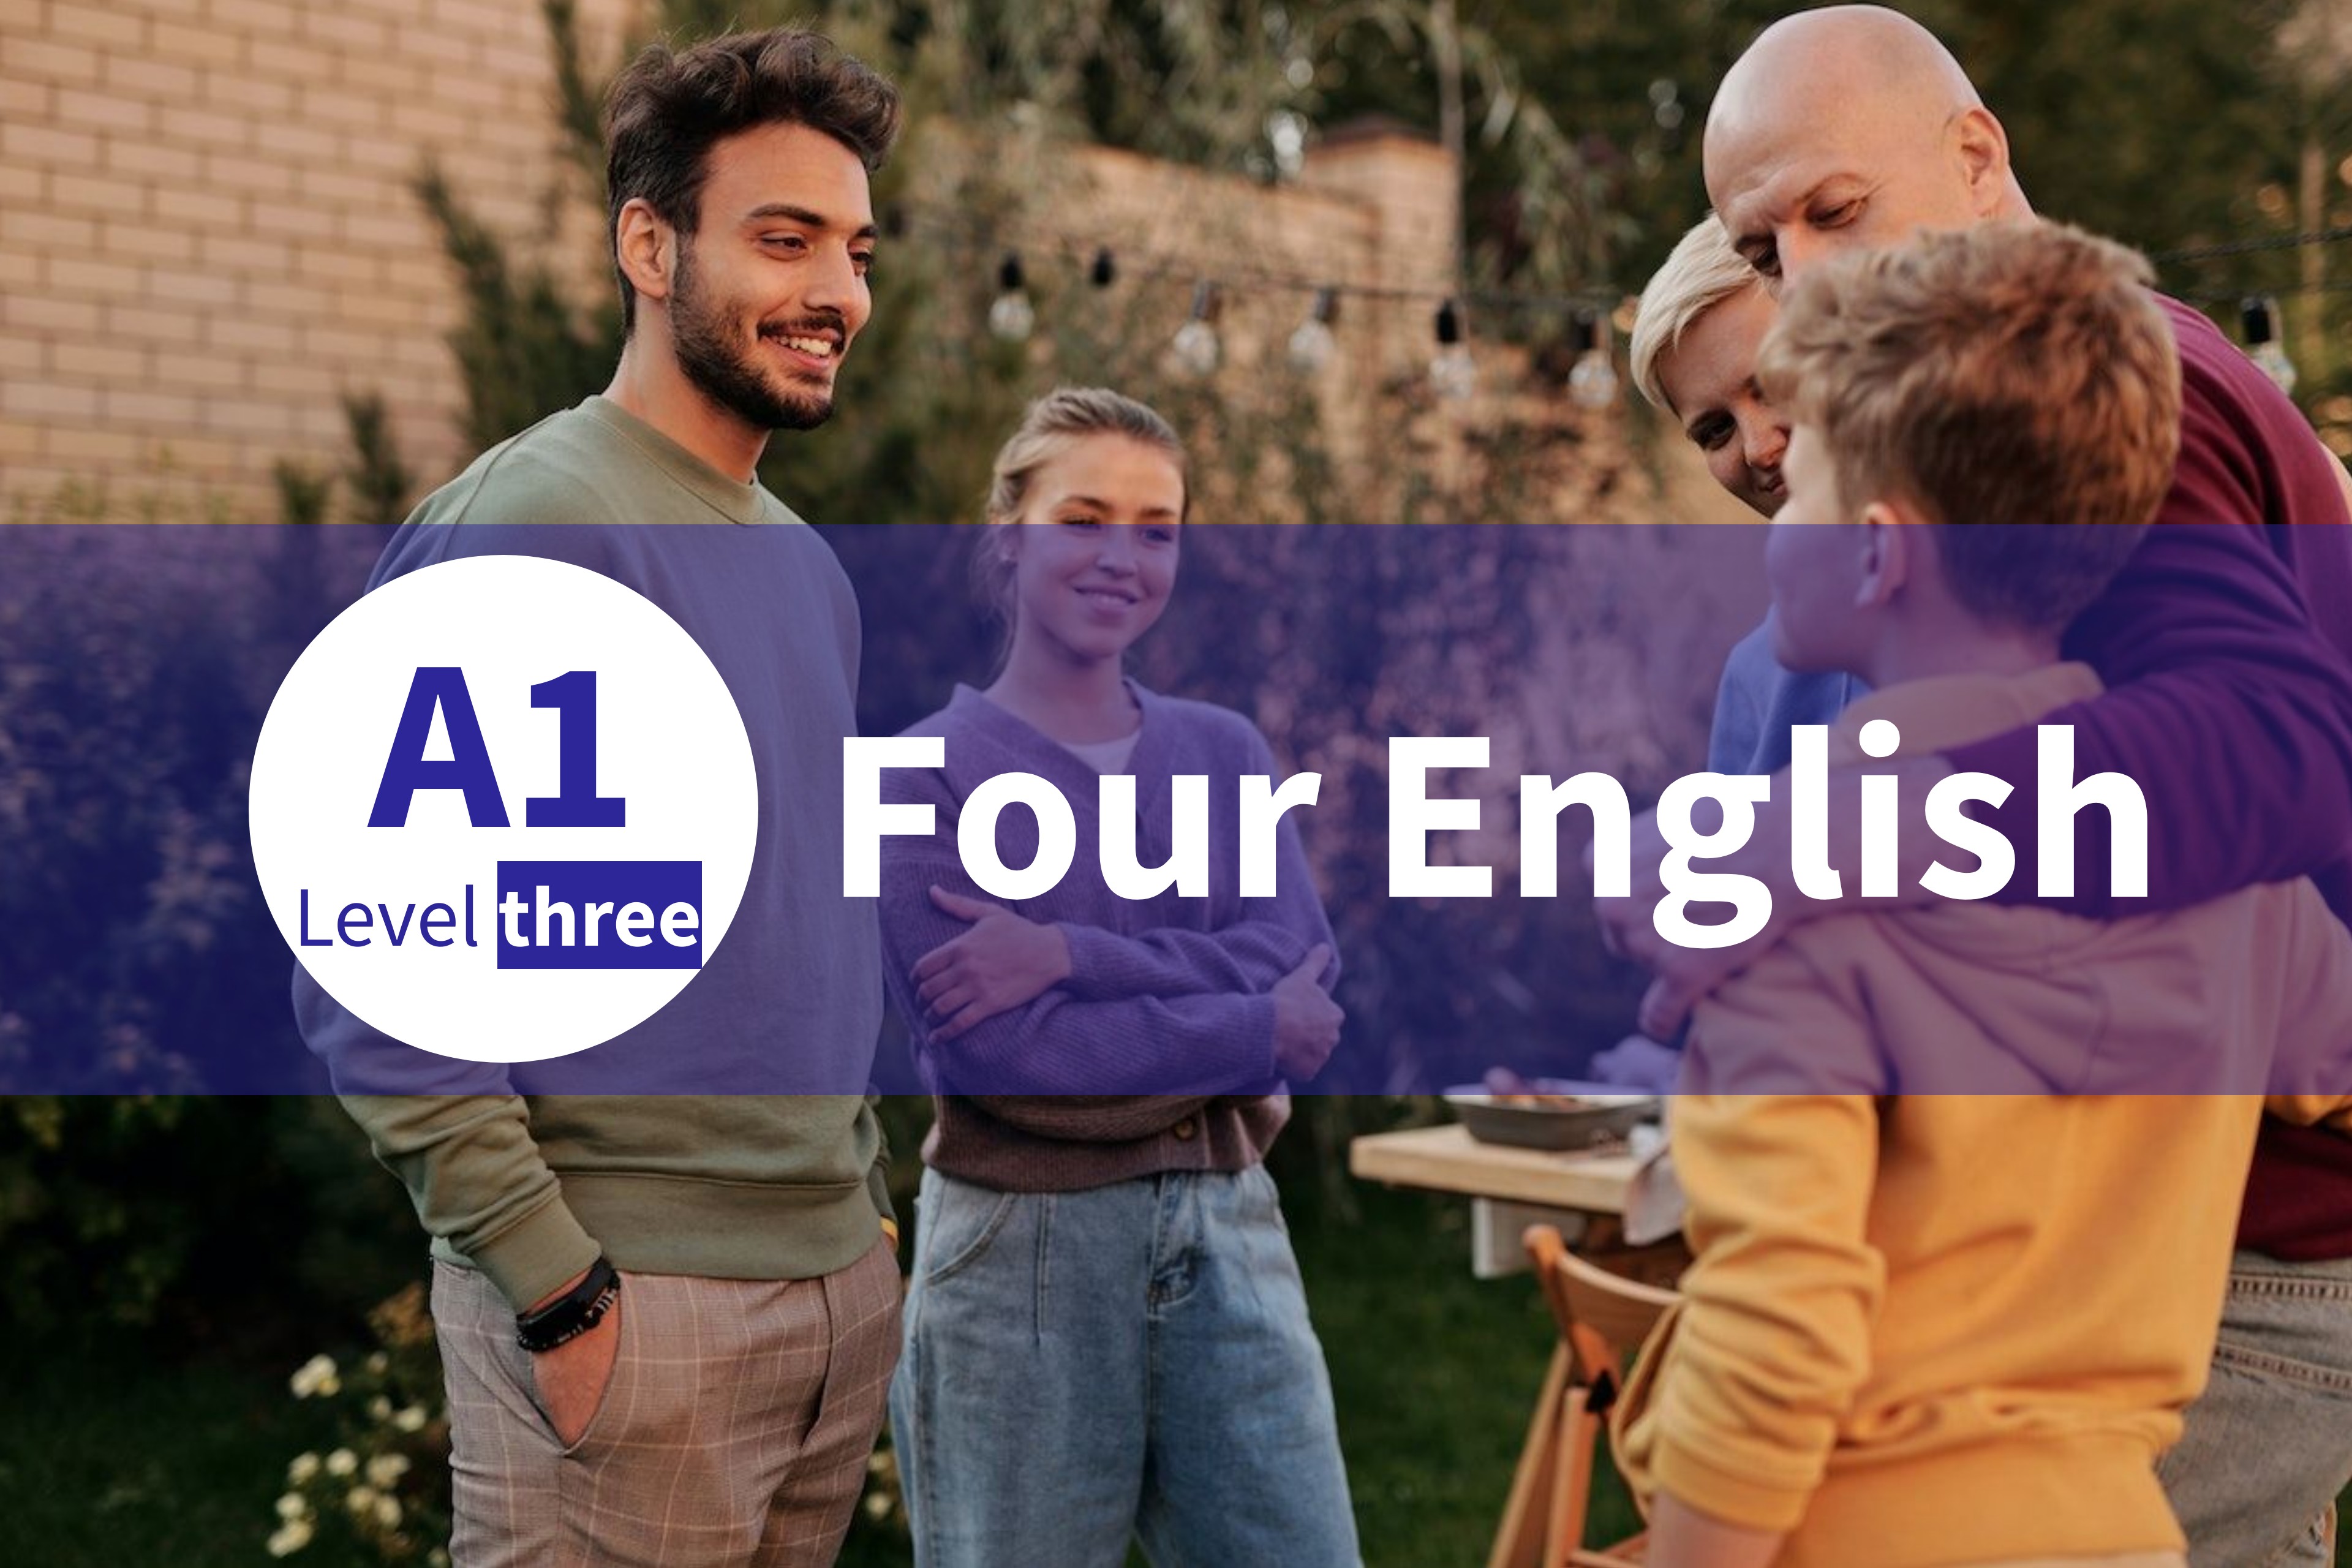  Four English (Inglés A1) level three (semilla) 